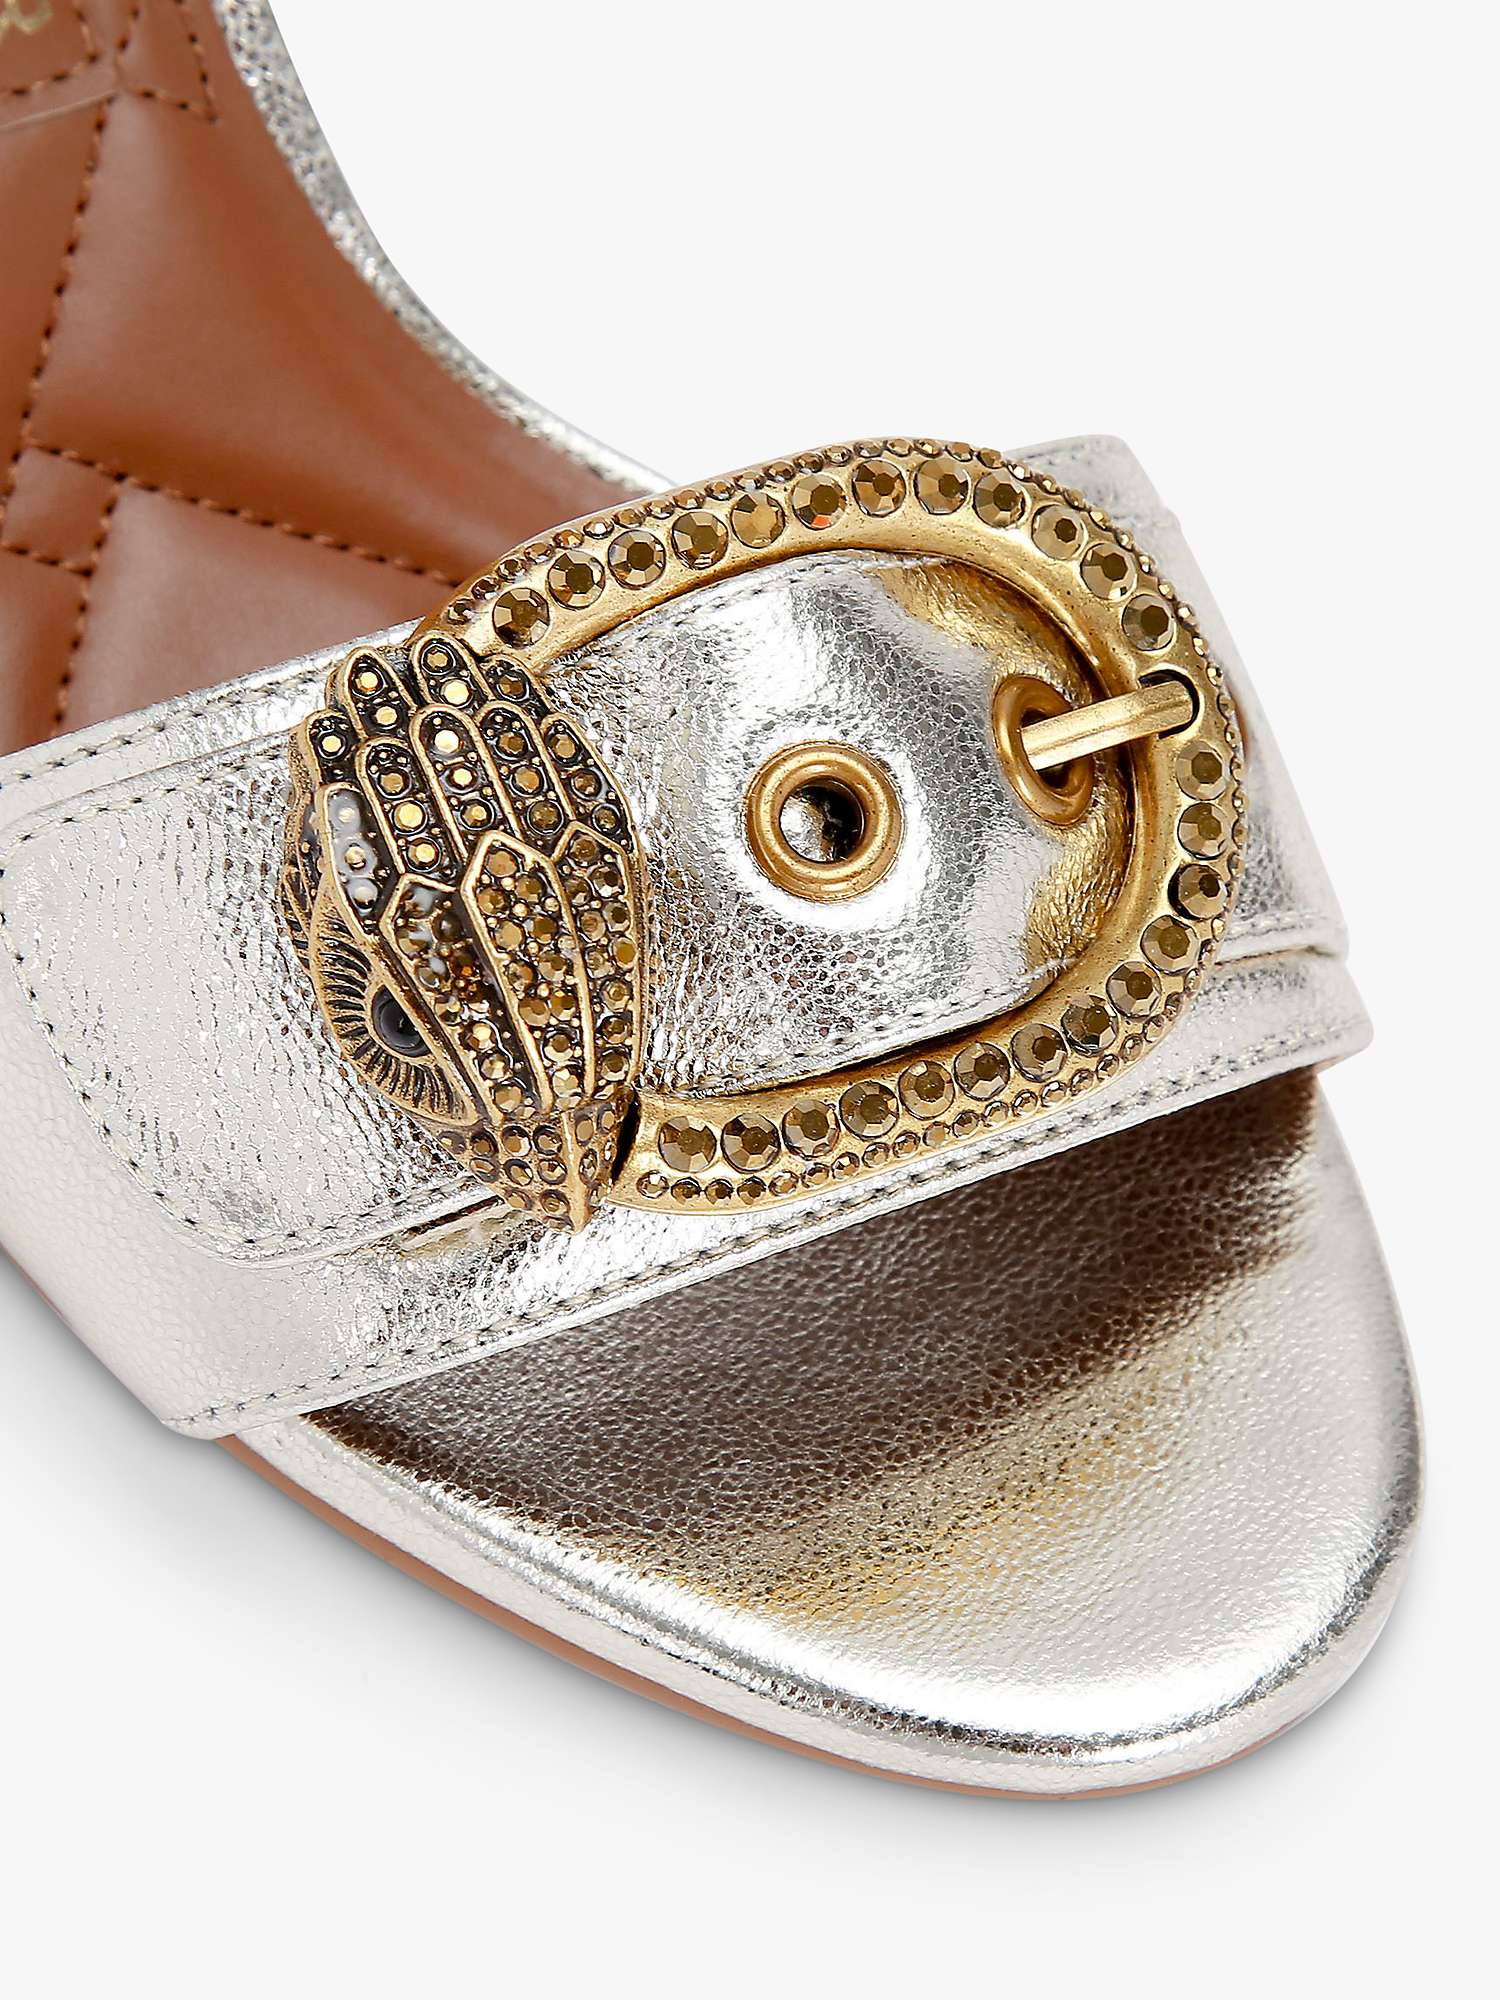 Buy Kurt Geiger London Mayfair Embellished Block Heel Leather Sandals, Silver Online at johnlewis.com